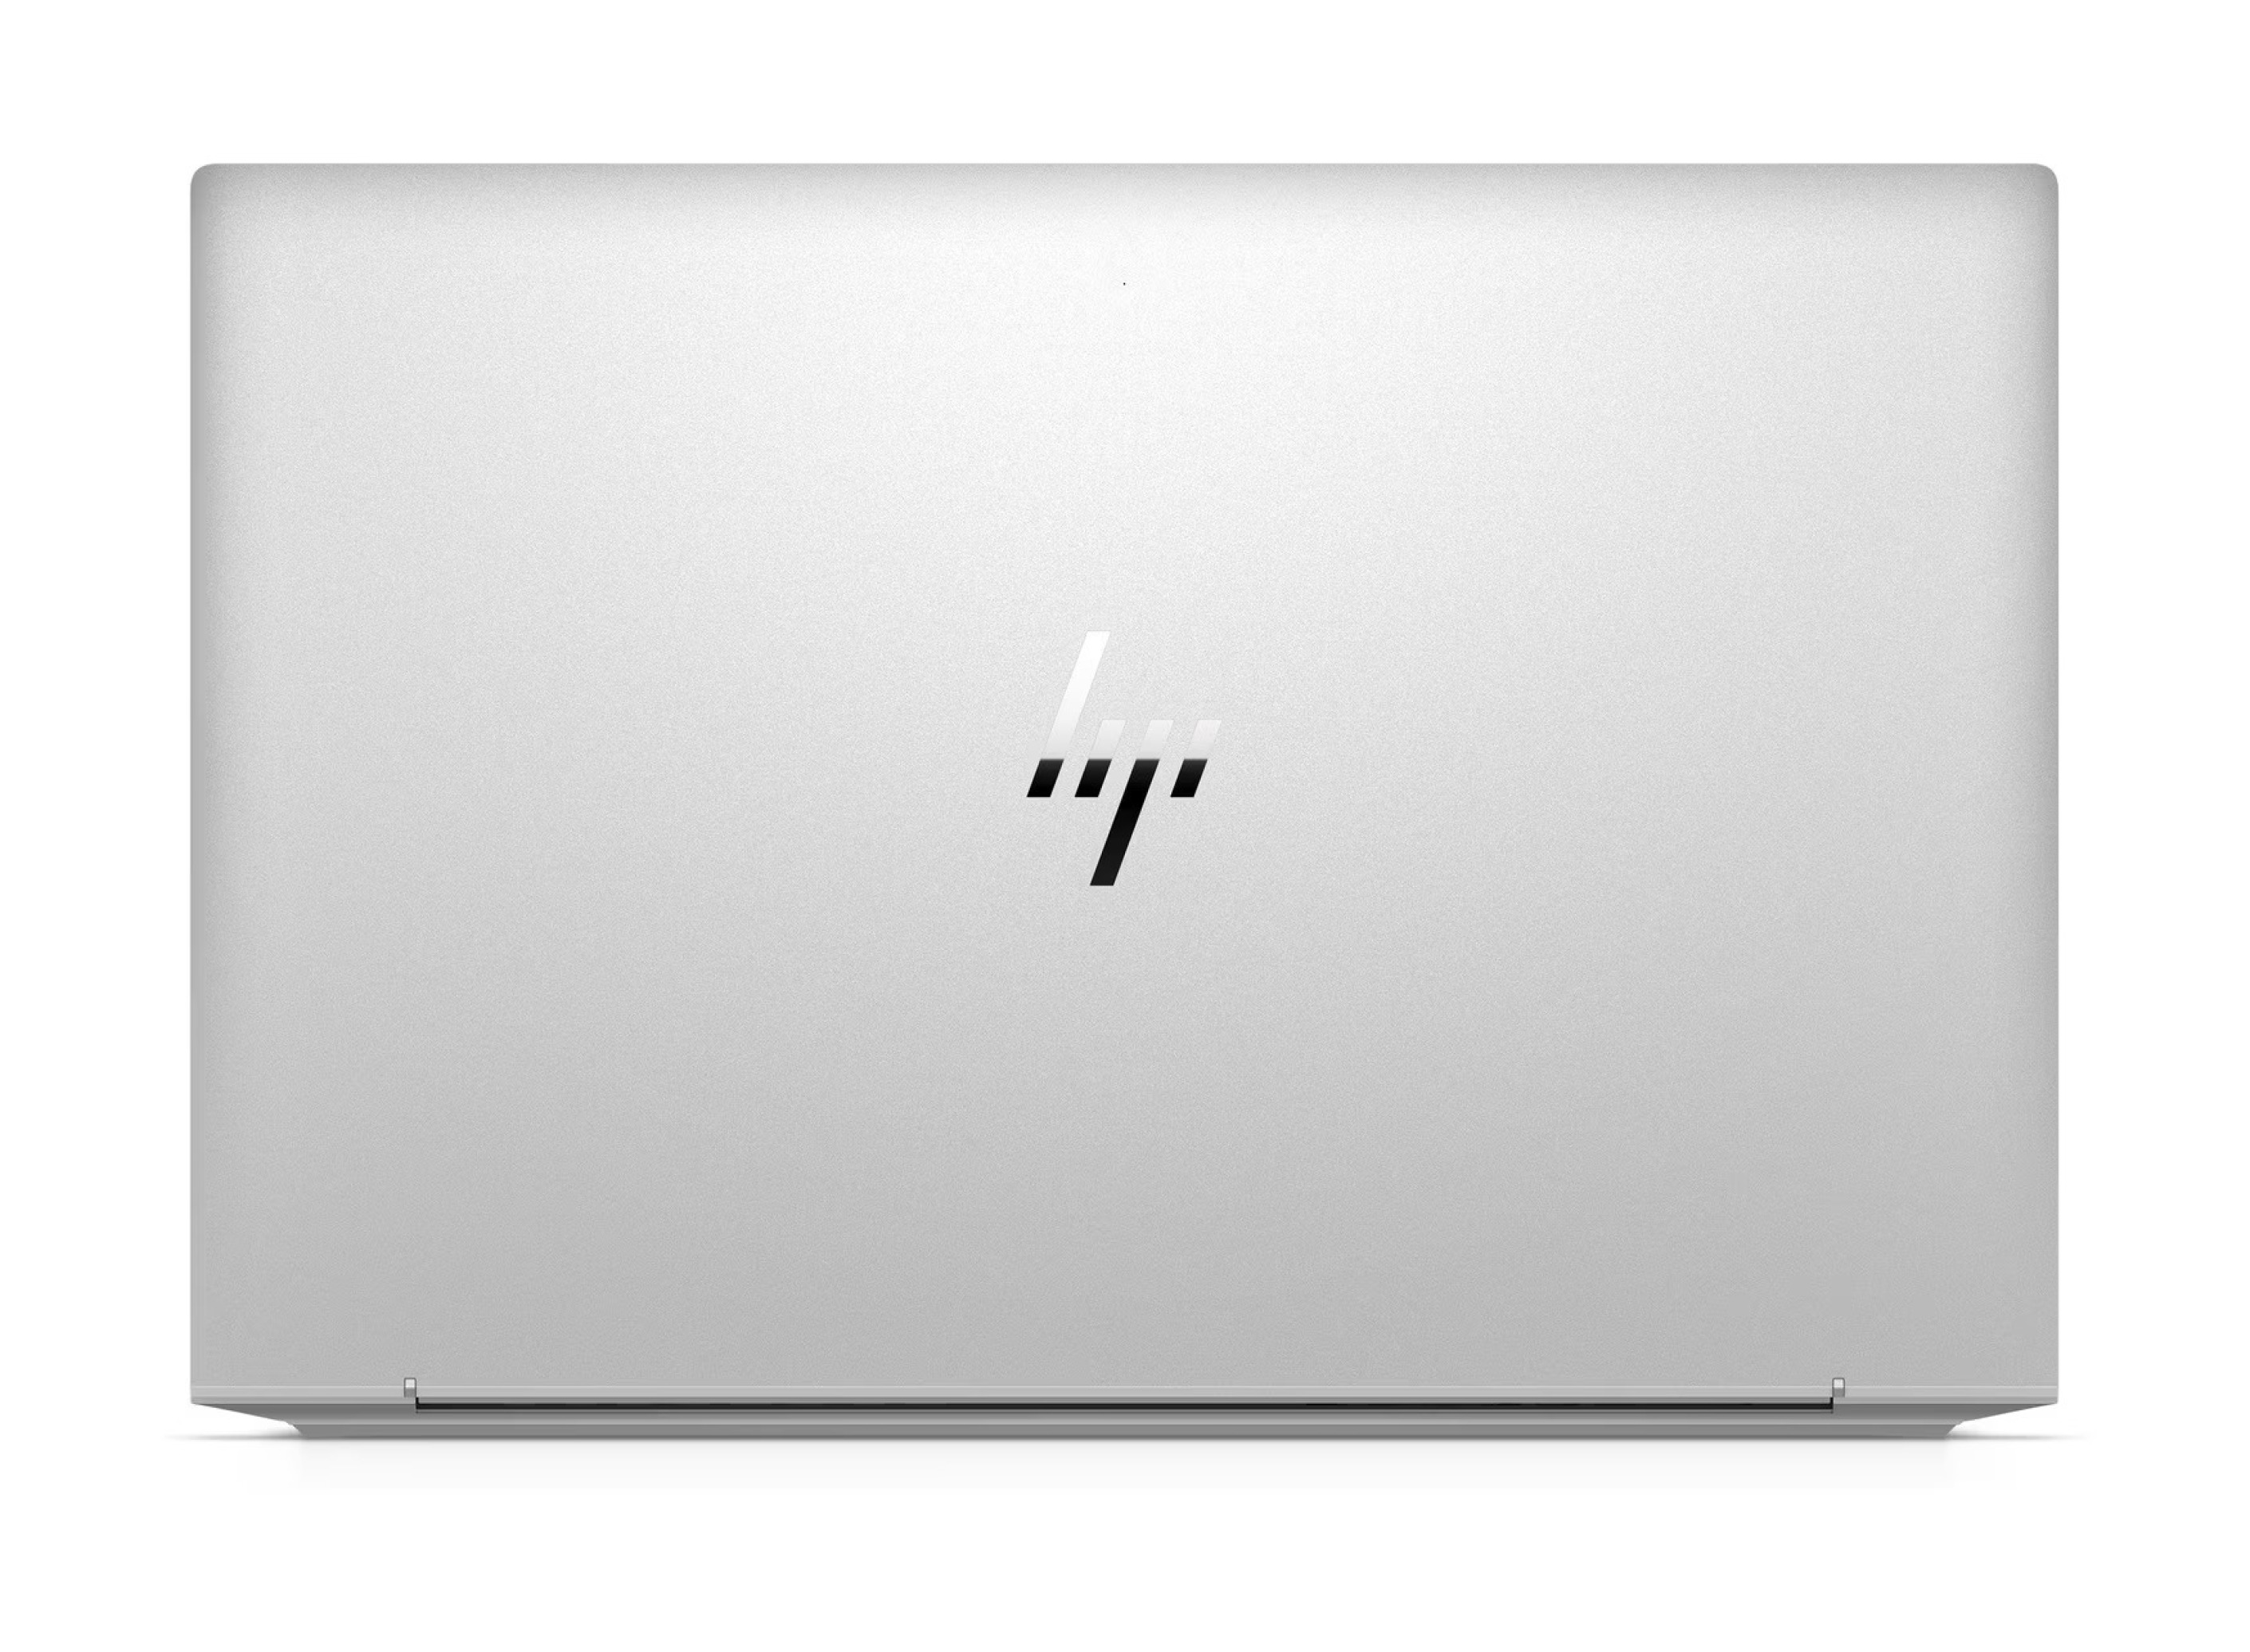  لپ تاپ HP سری EliteBook مدل 840 آئرو G8 | لاکچری لپتاپ 